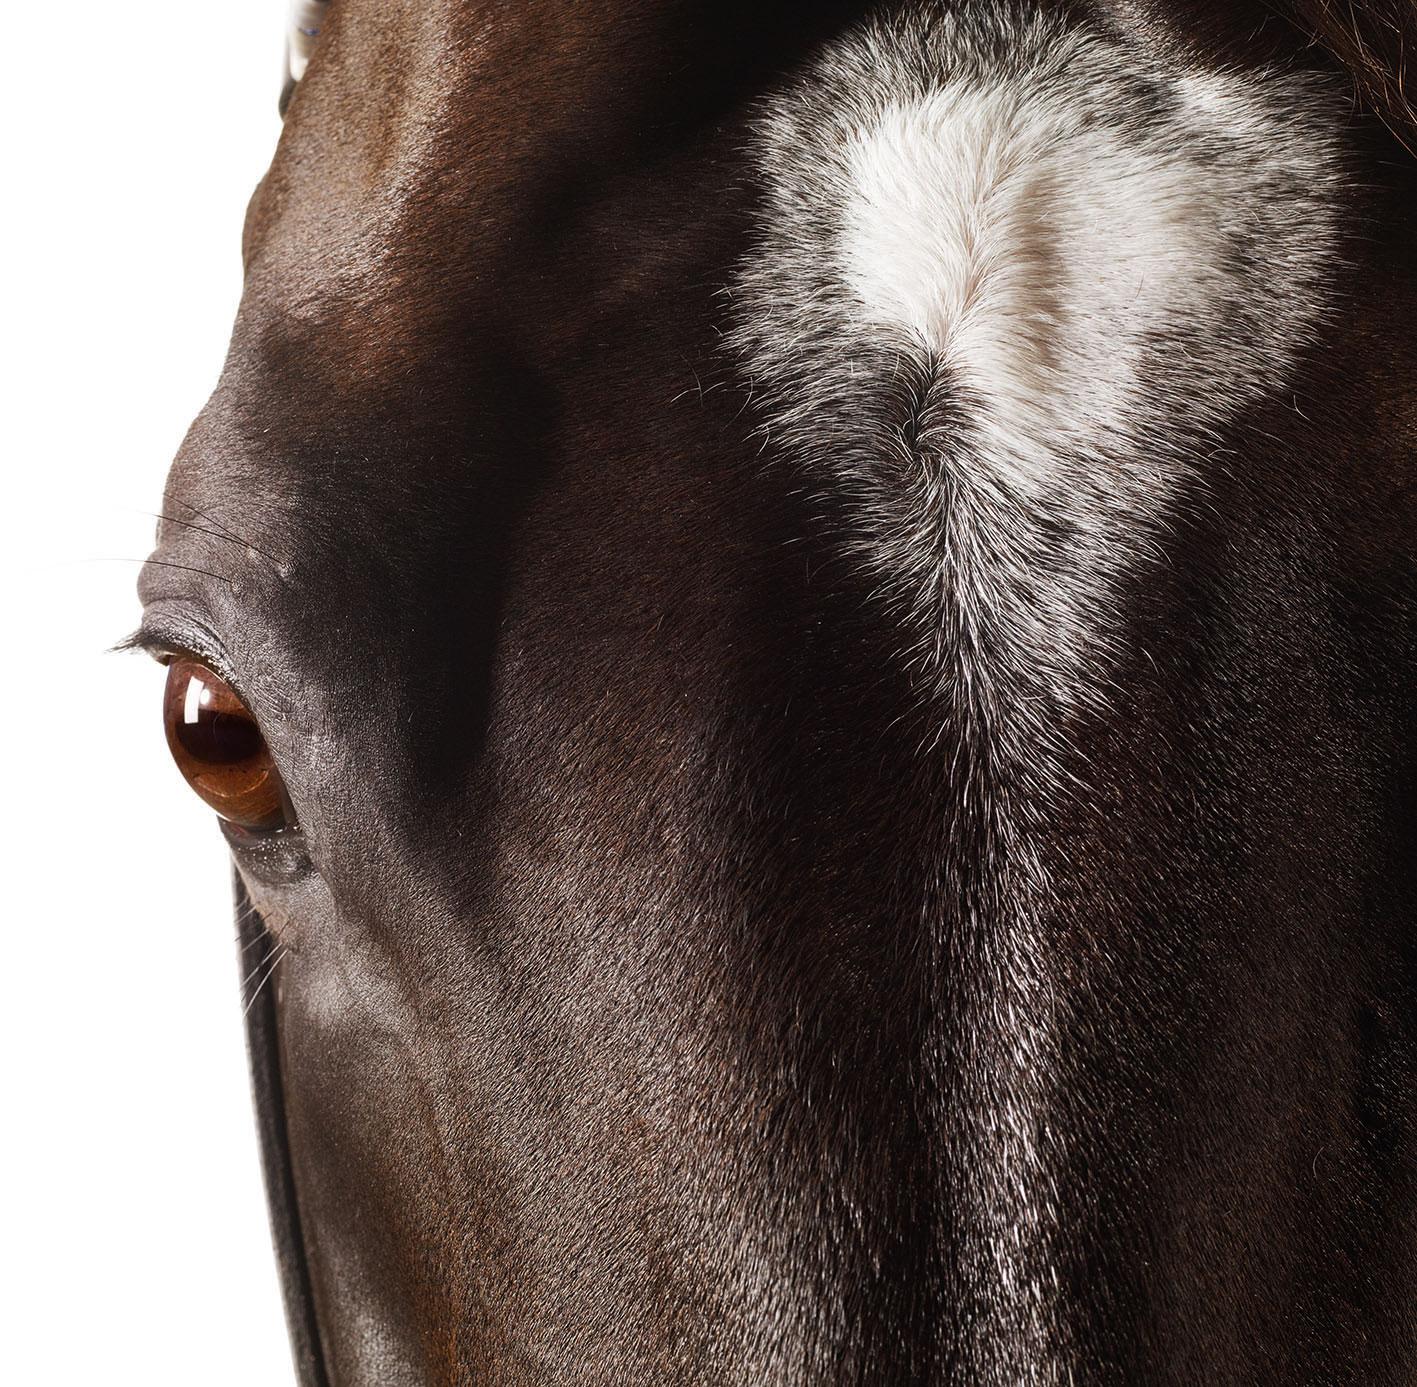 John Reardon Animal Print - Studio Portrait: Medaglia d’Oro, Horse head and eye - Stallion Portrait